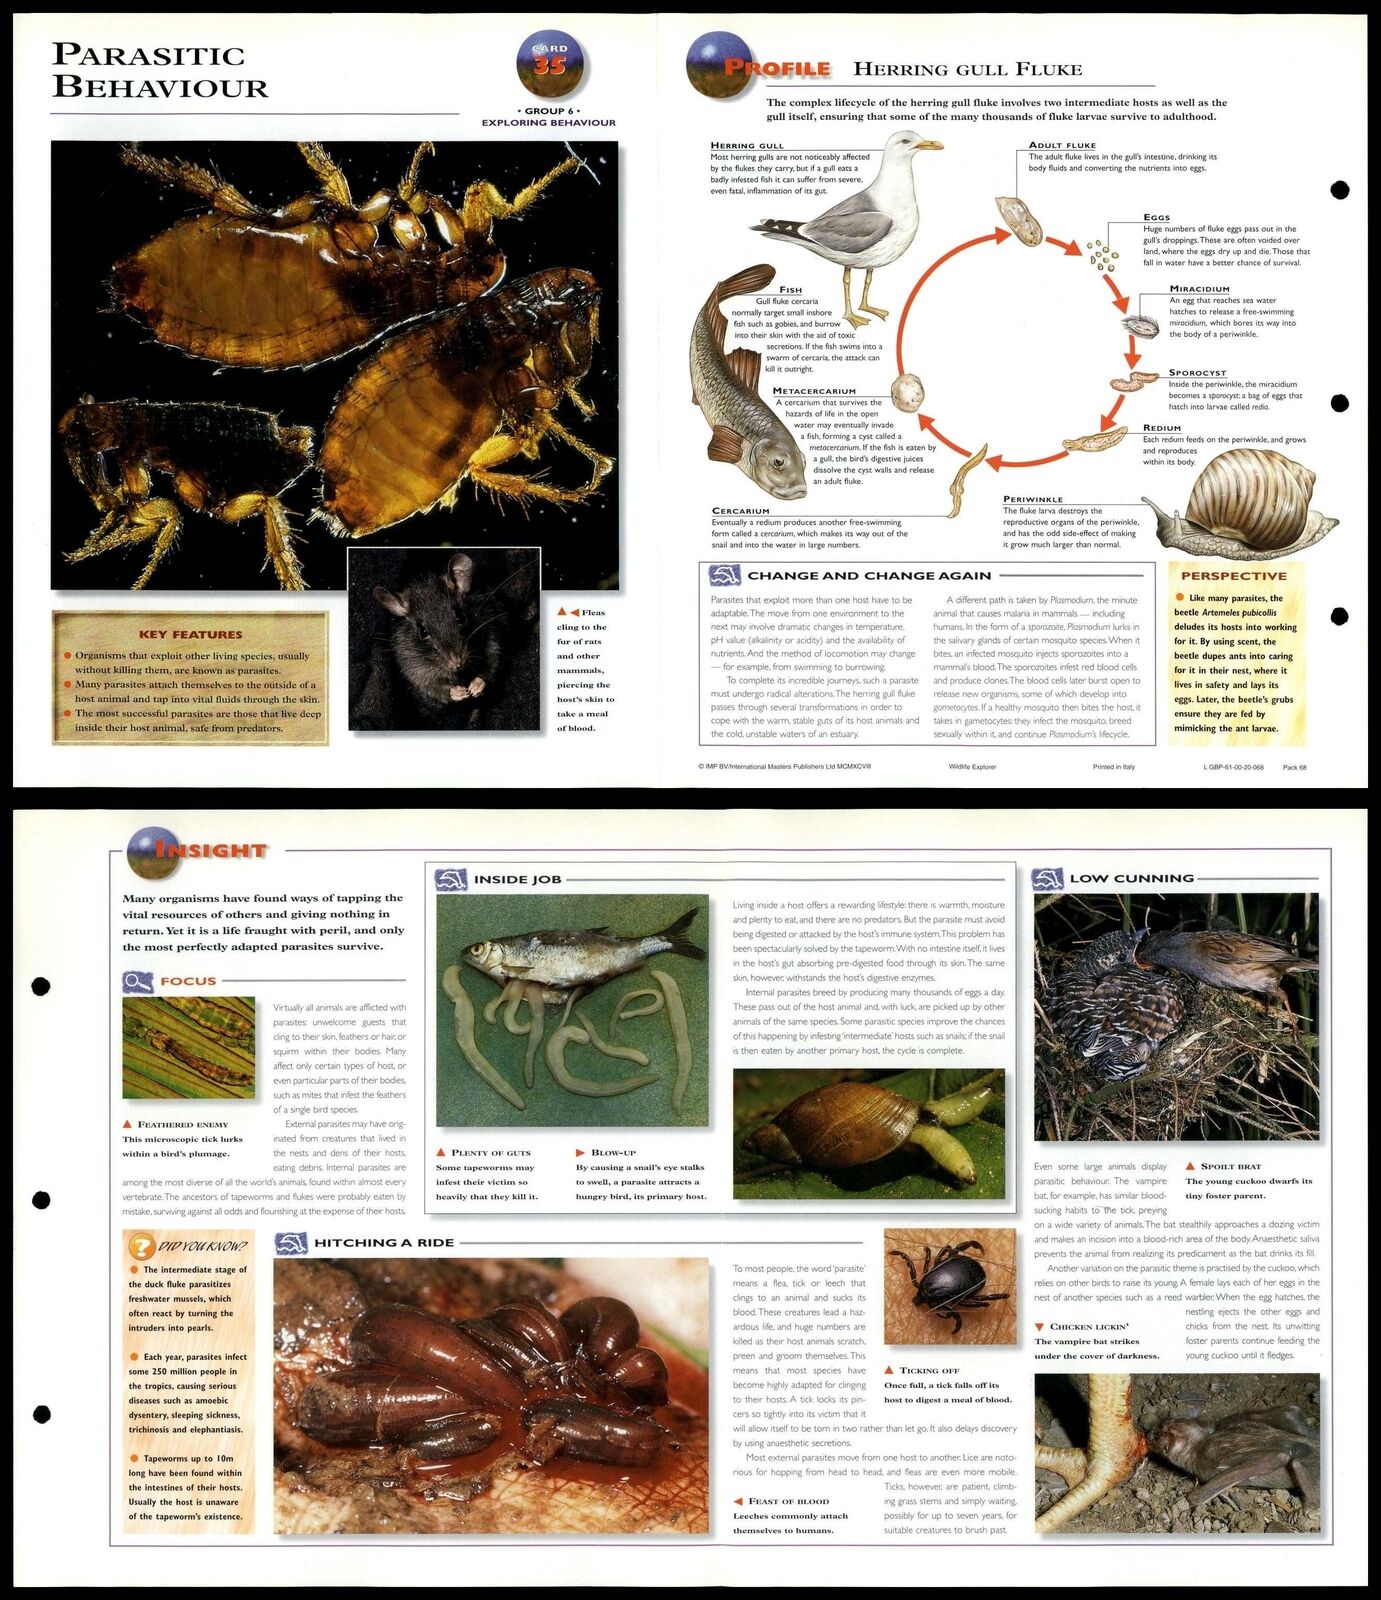 Parasitic Behaviour #35 Behaviour - Wildlife Explorer Fold-Out Card